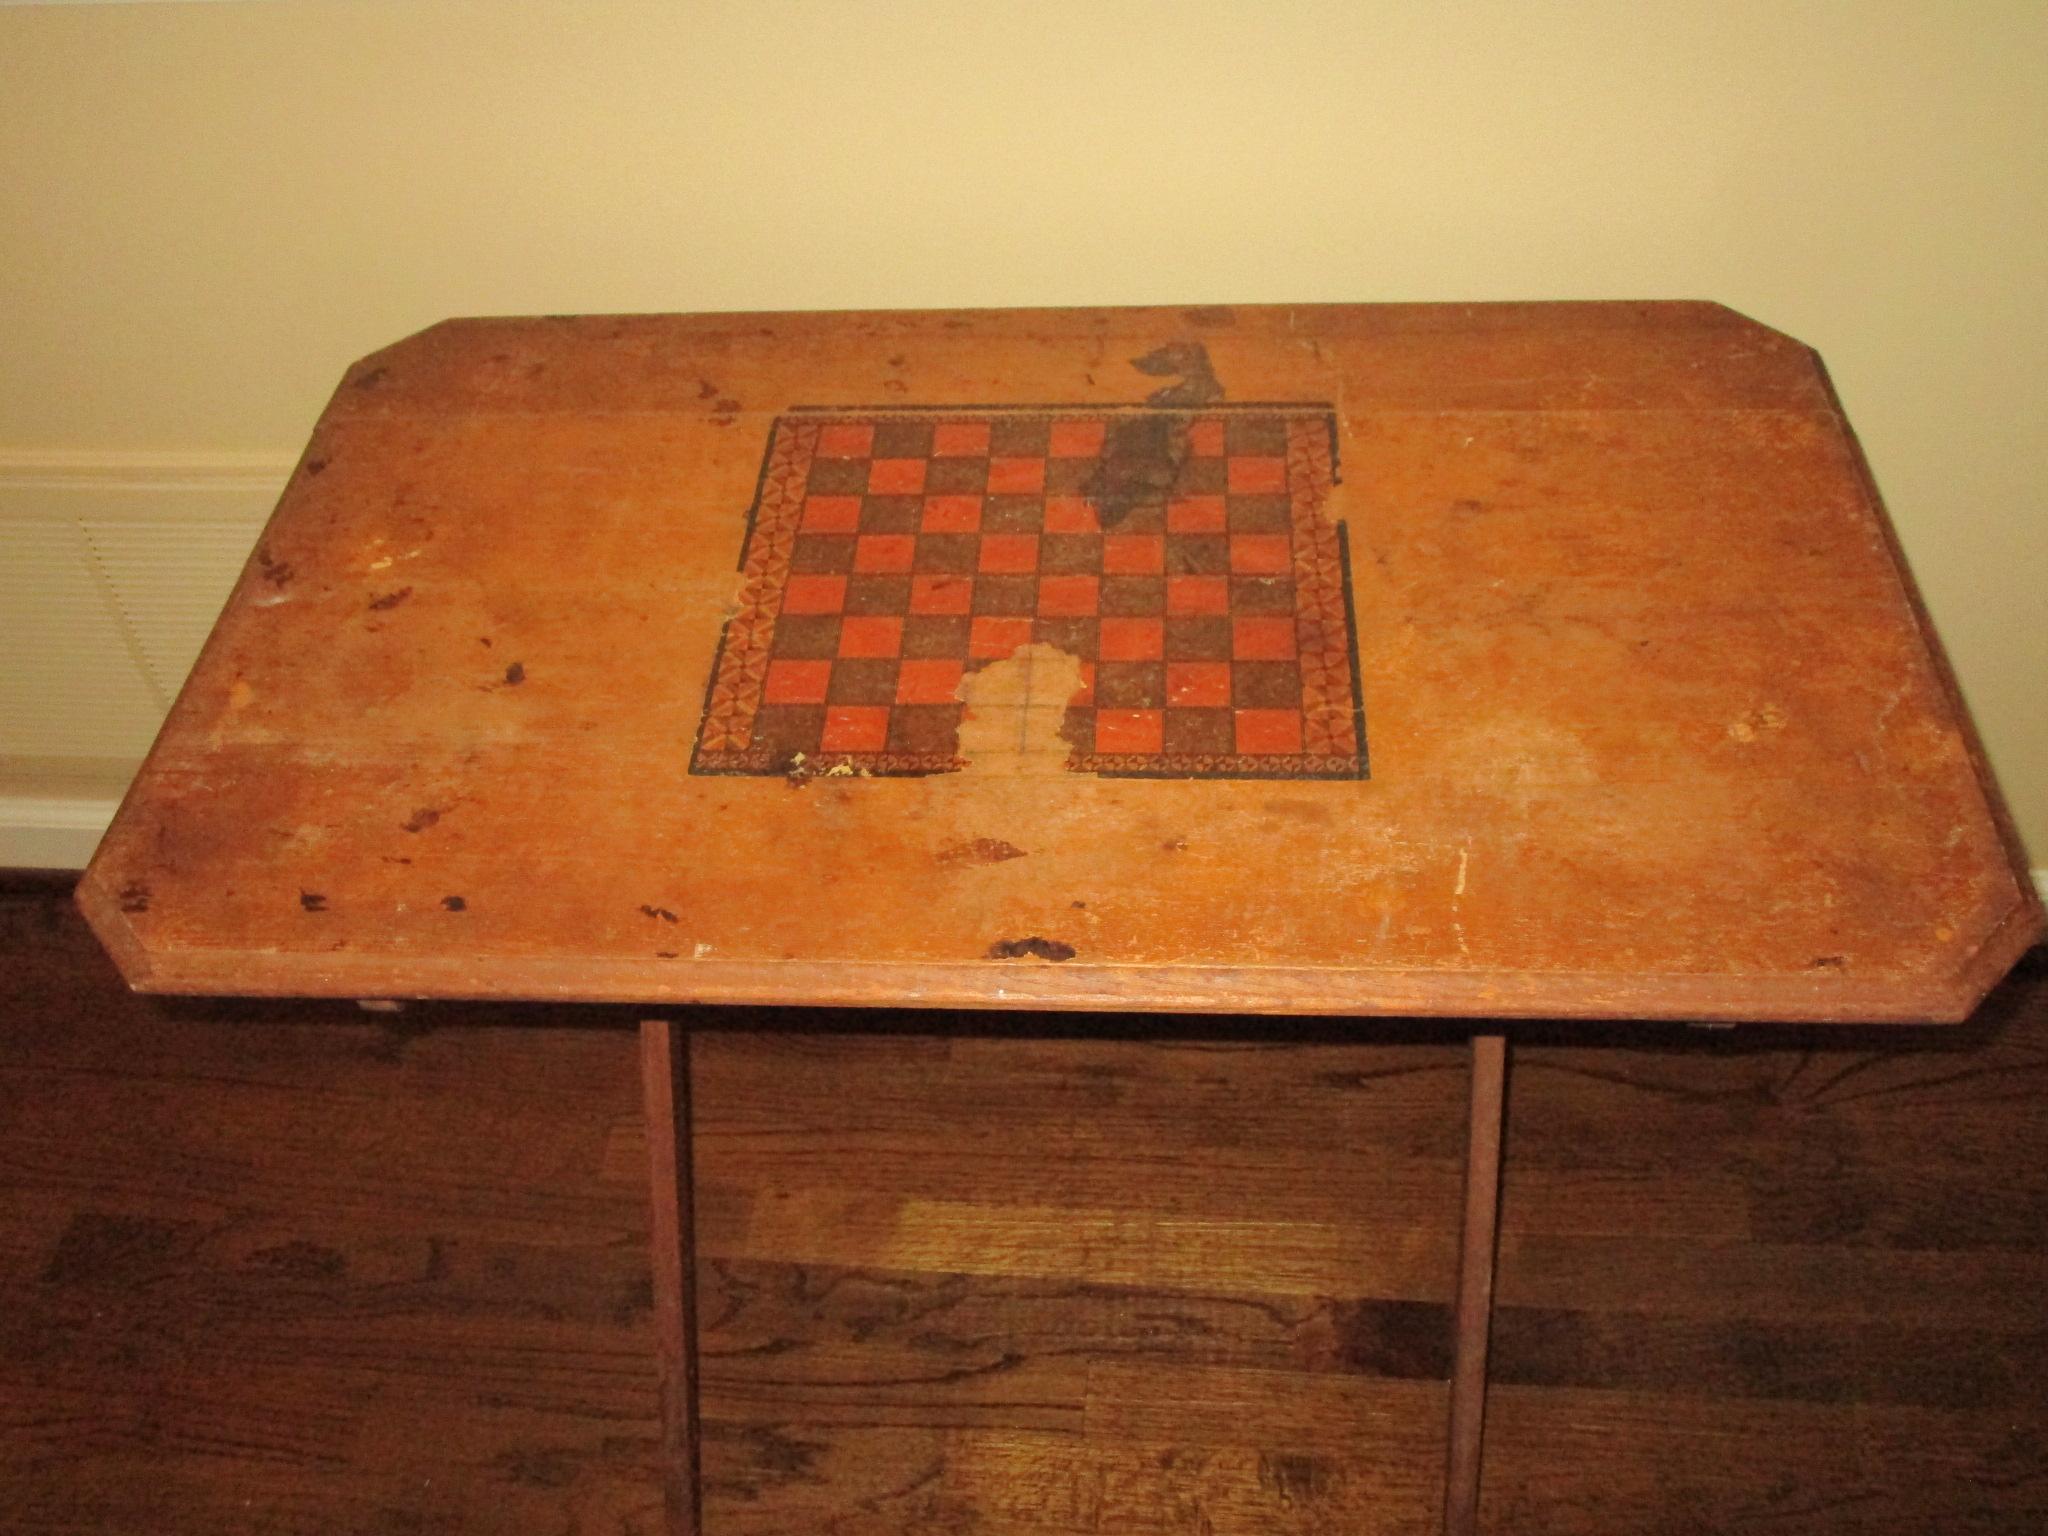 Folding Wooden Table w/Cheeseboard Platter on Top.